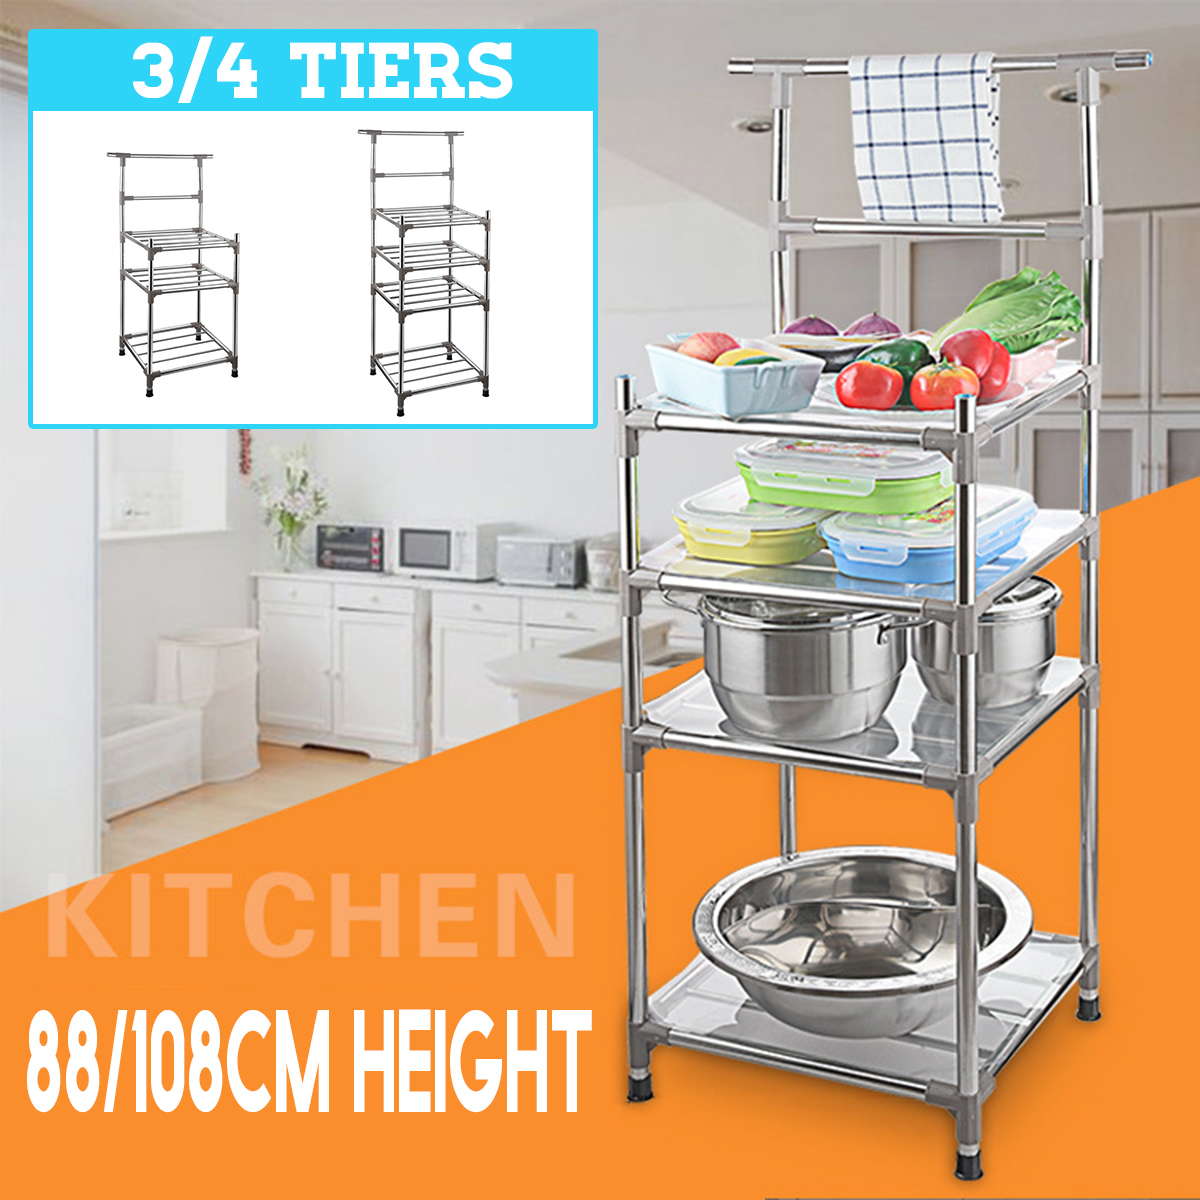 34-Tiers-Stainless-Steel-Kitchen-Rack-Shelves-Sheelf-Microwave-Storage-Holder-1712450-1